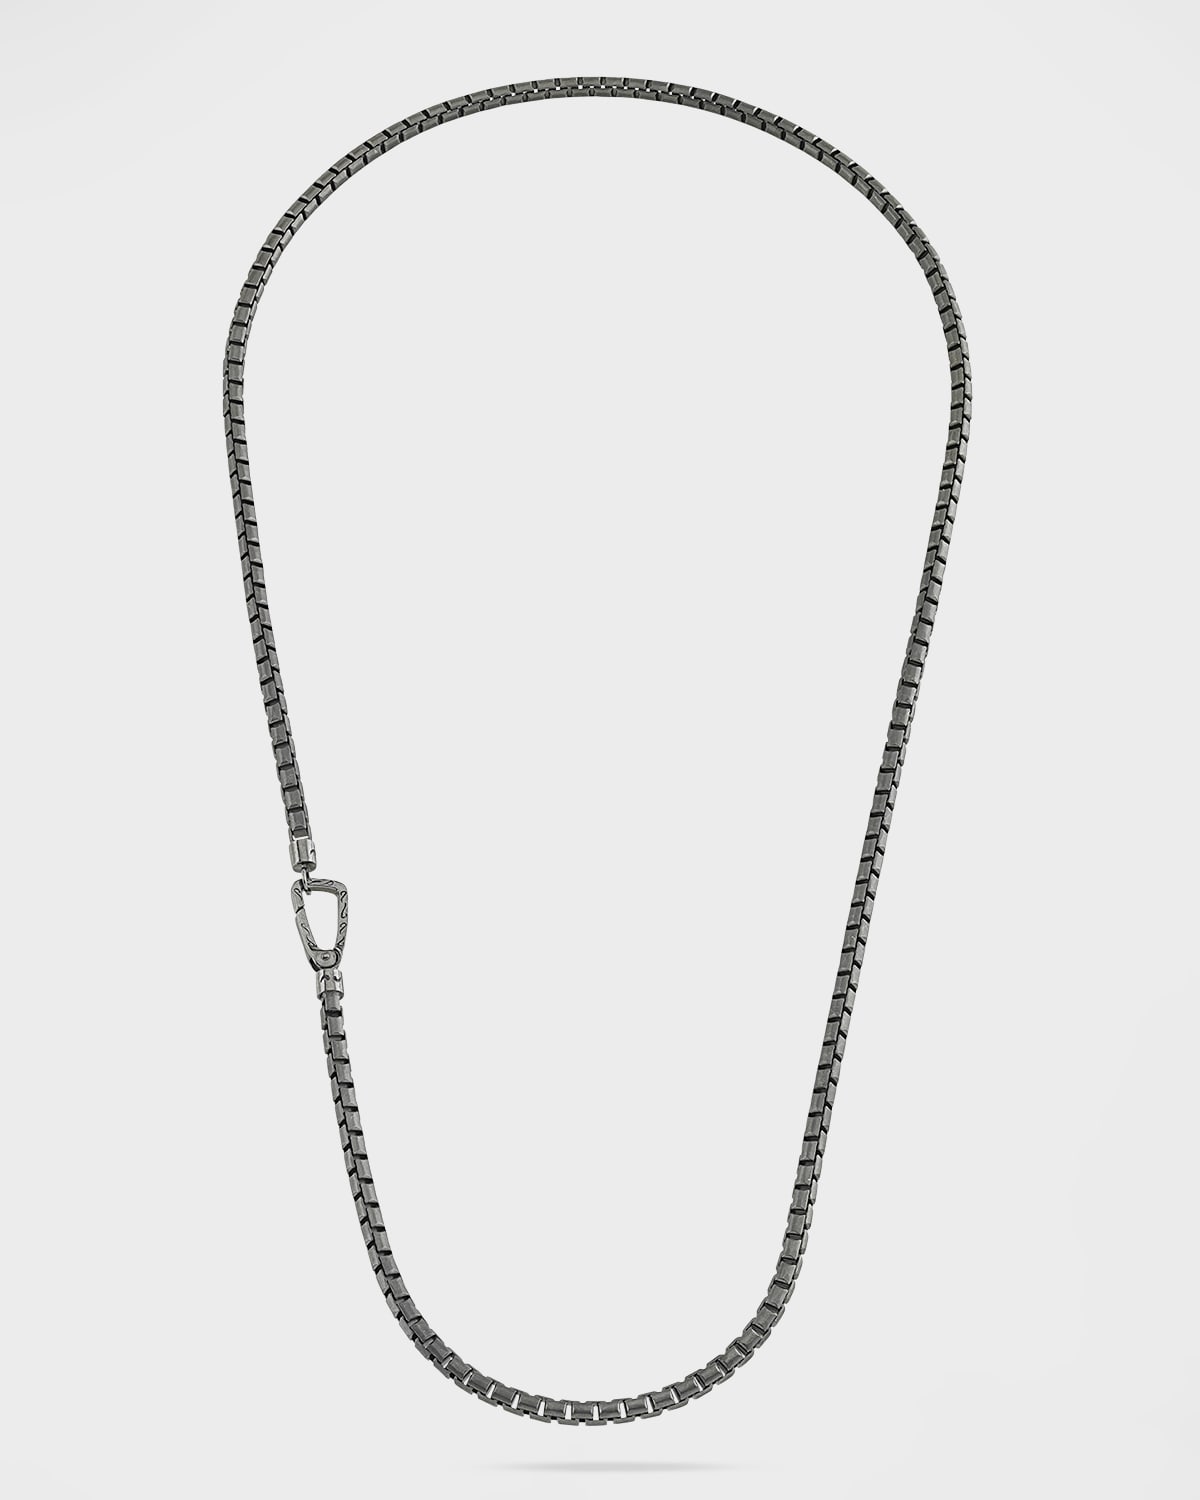 Marco Dal Maso Carved Tubular Oxidized Silver Necklace, 24"l